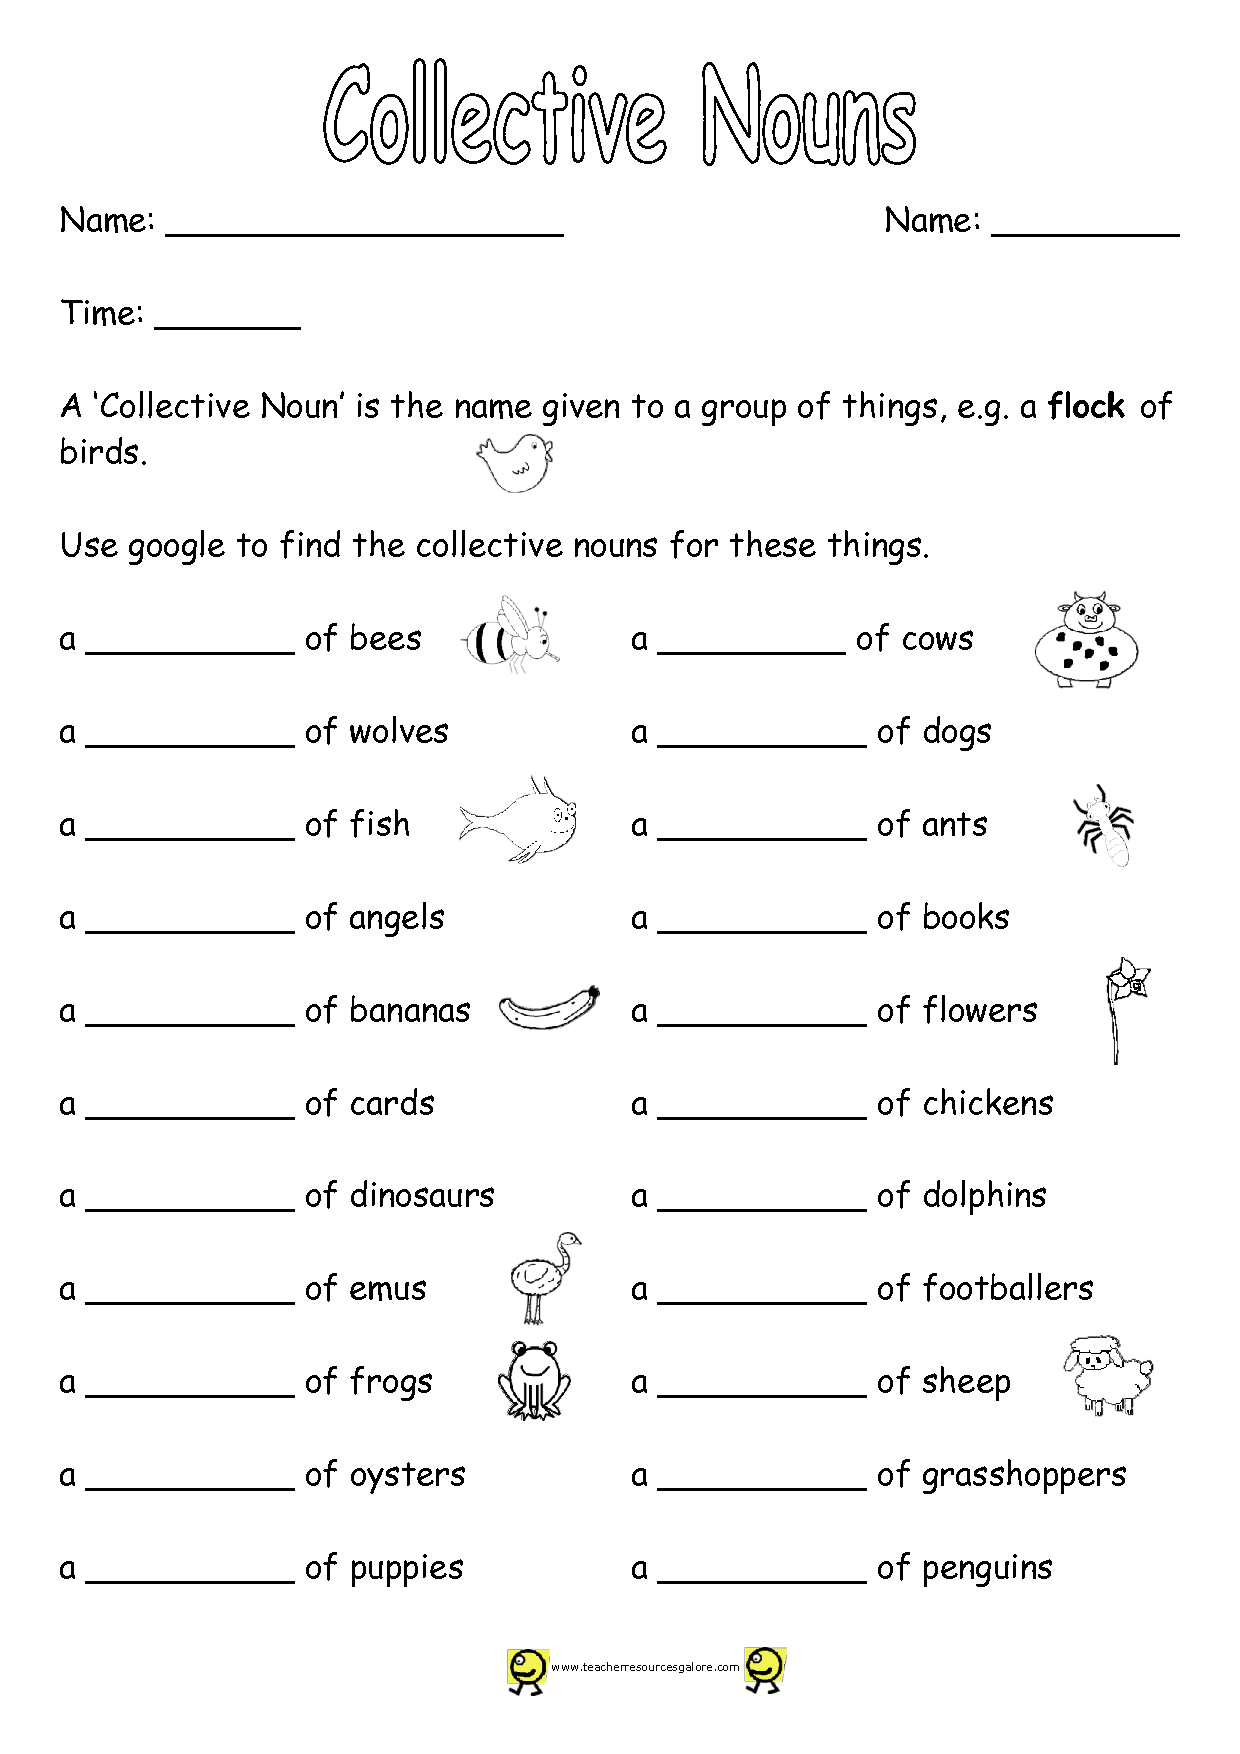 parts-of-speech-worksheets-worksheets-for-grade-3-sequencing-worksheets-printable-worksheets